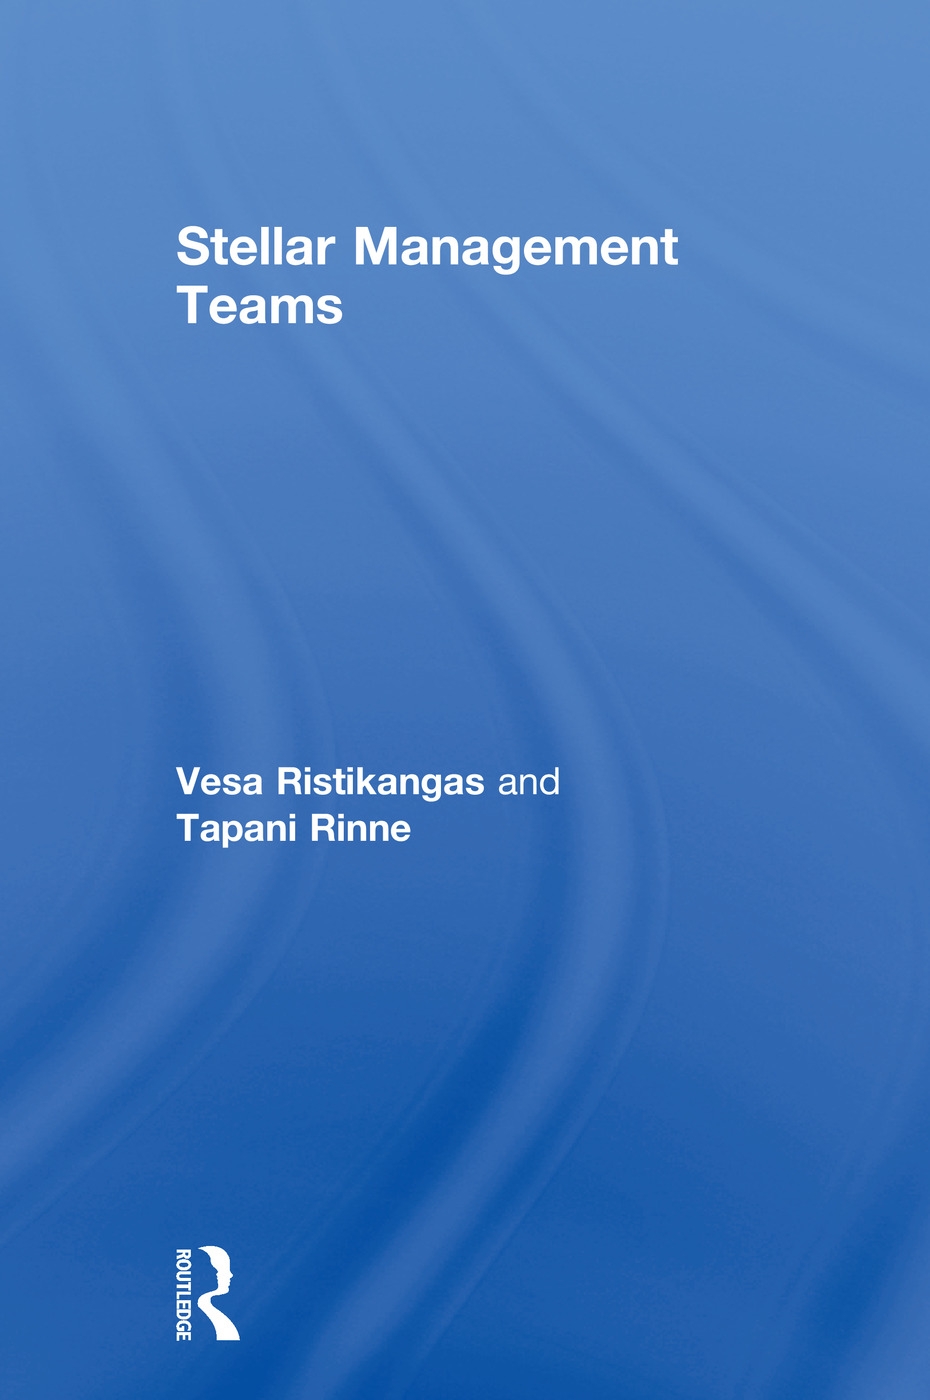 Stellar Management Teams